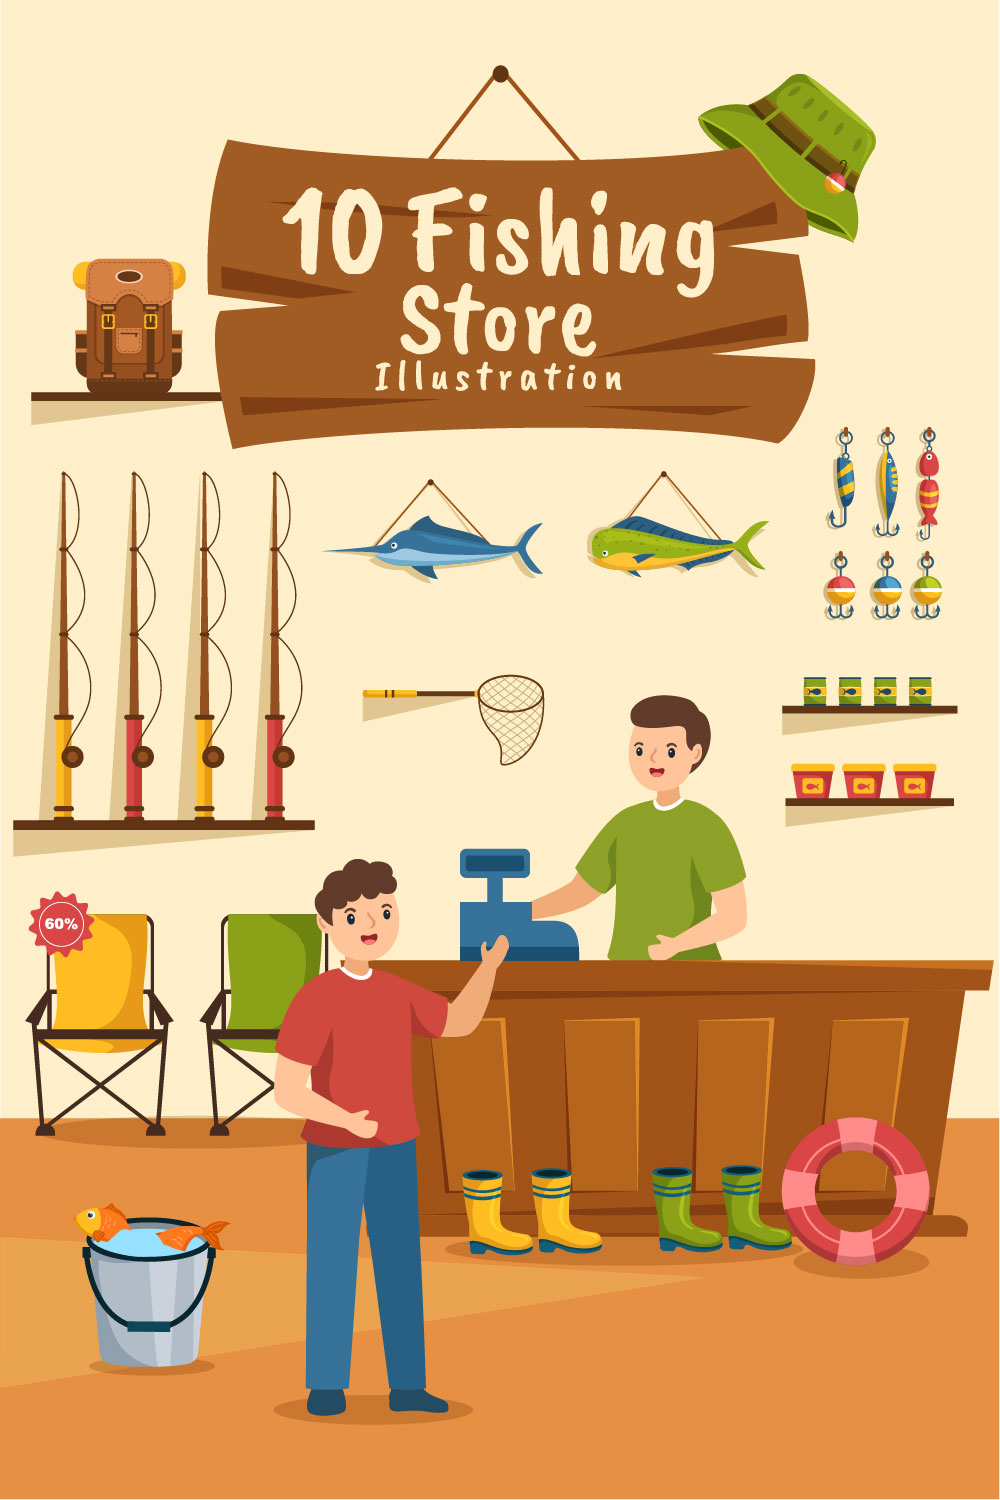 Adorable cartoon image of a fishing shop.